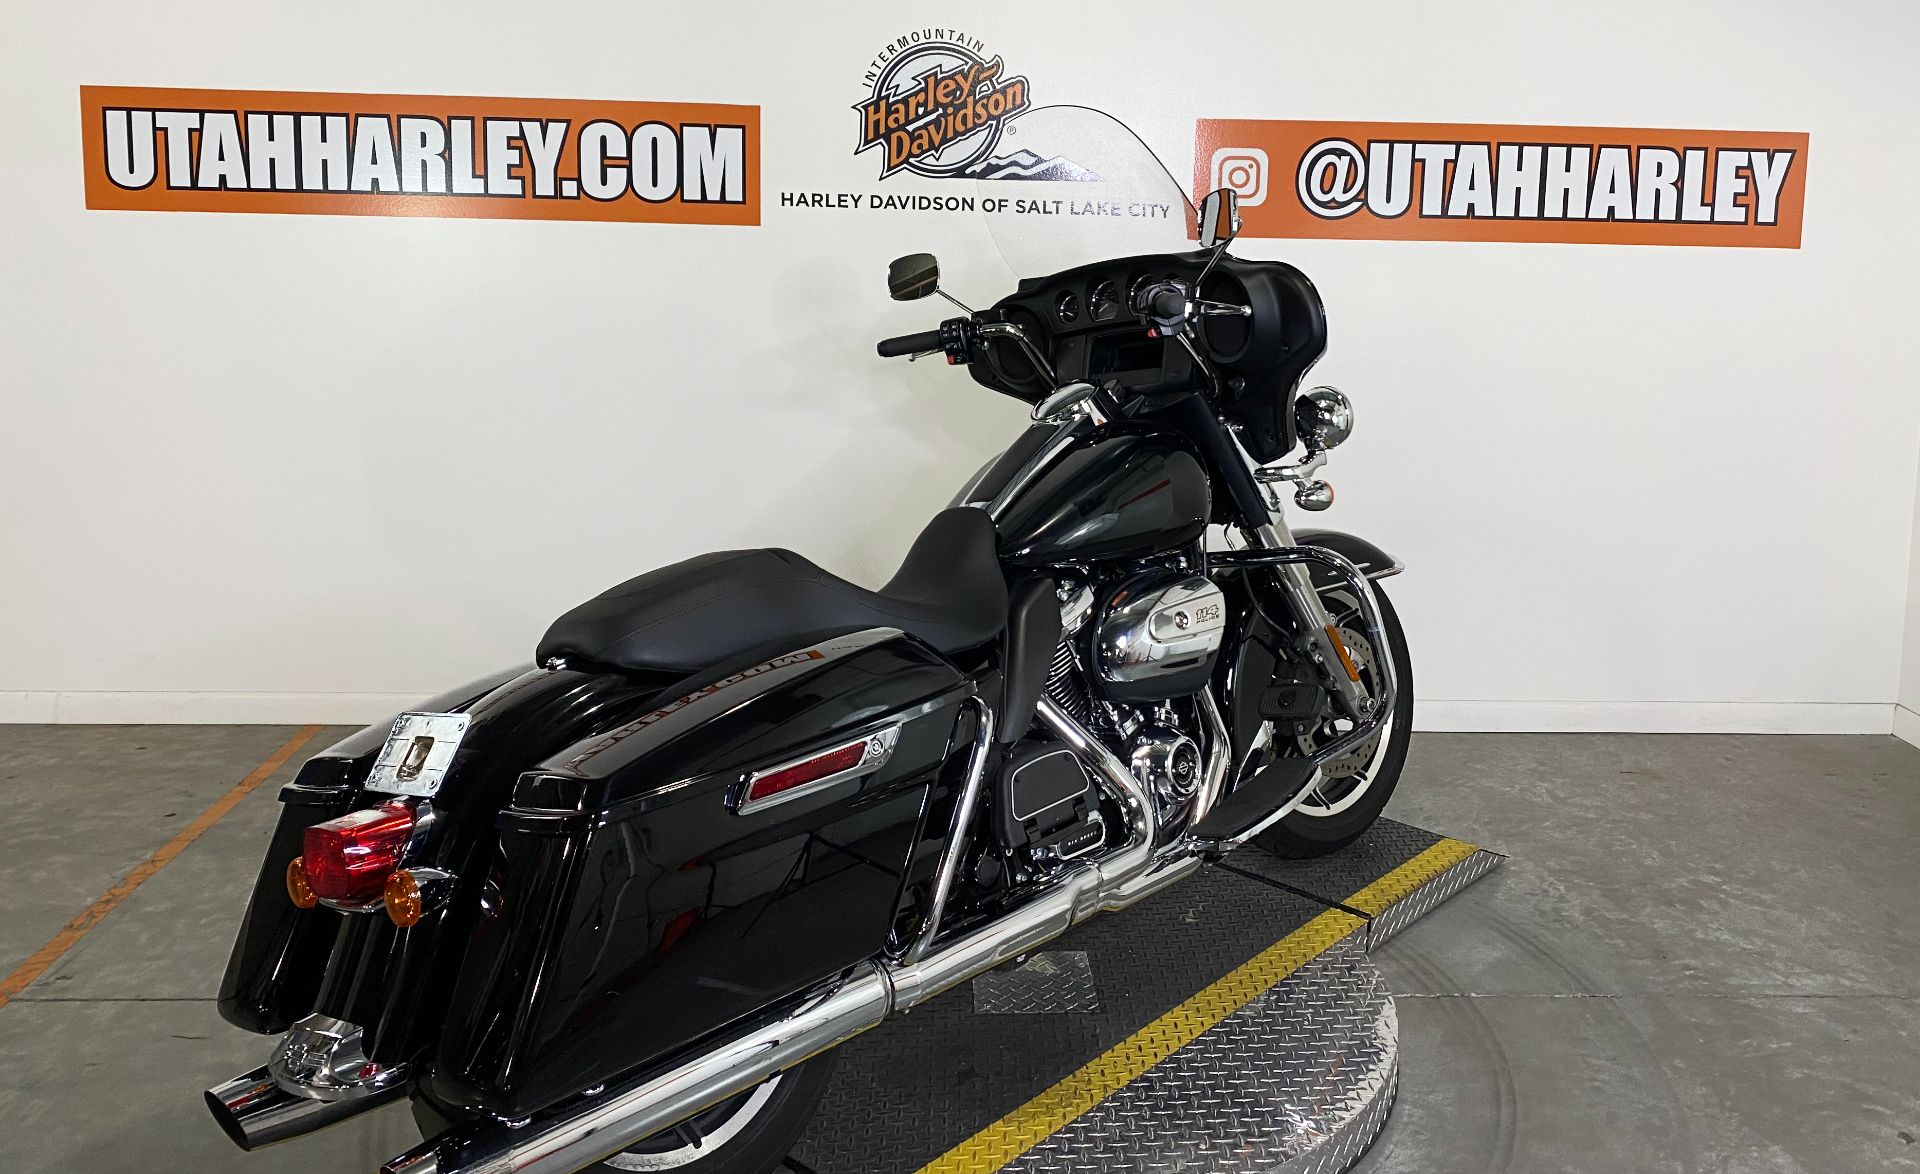 2020 Harley-Davidson Electra Glide Police - 114 motor in Salt Lake City, Utah - Photo 8